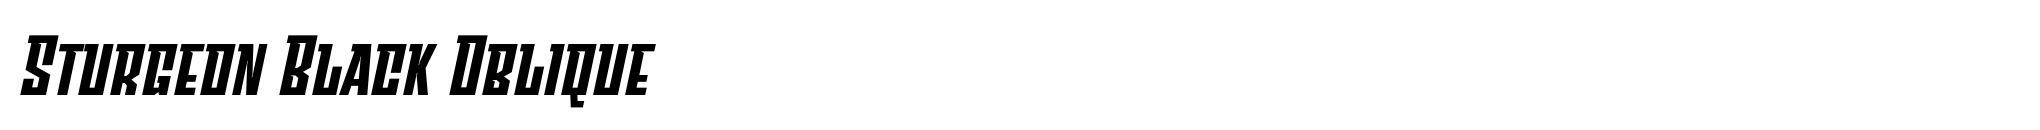 Sturgeon Black Oblique image